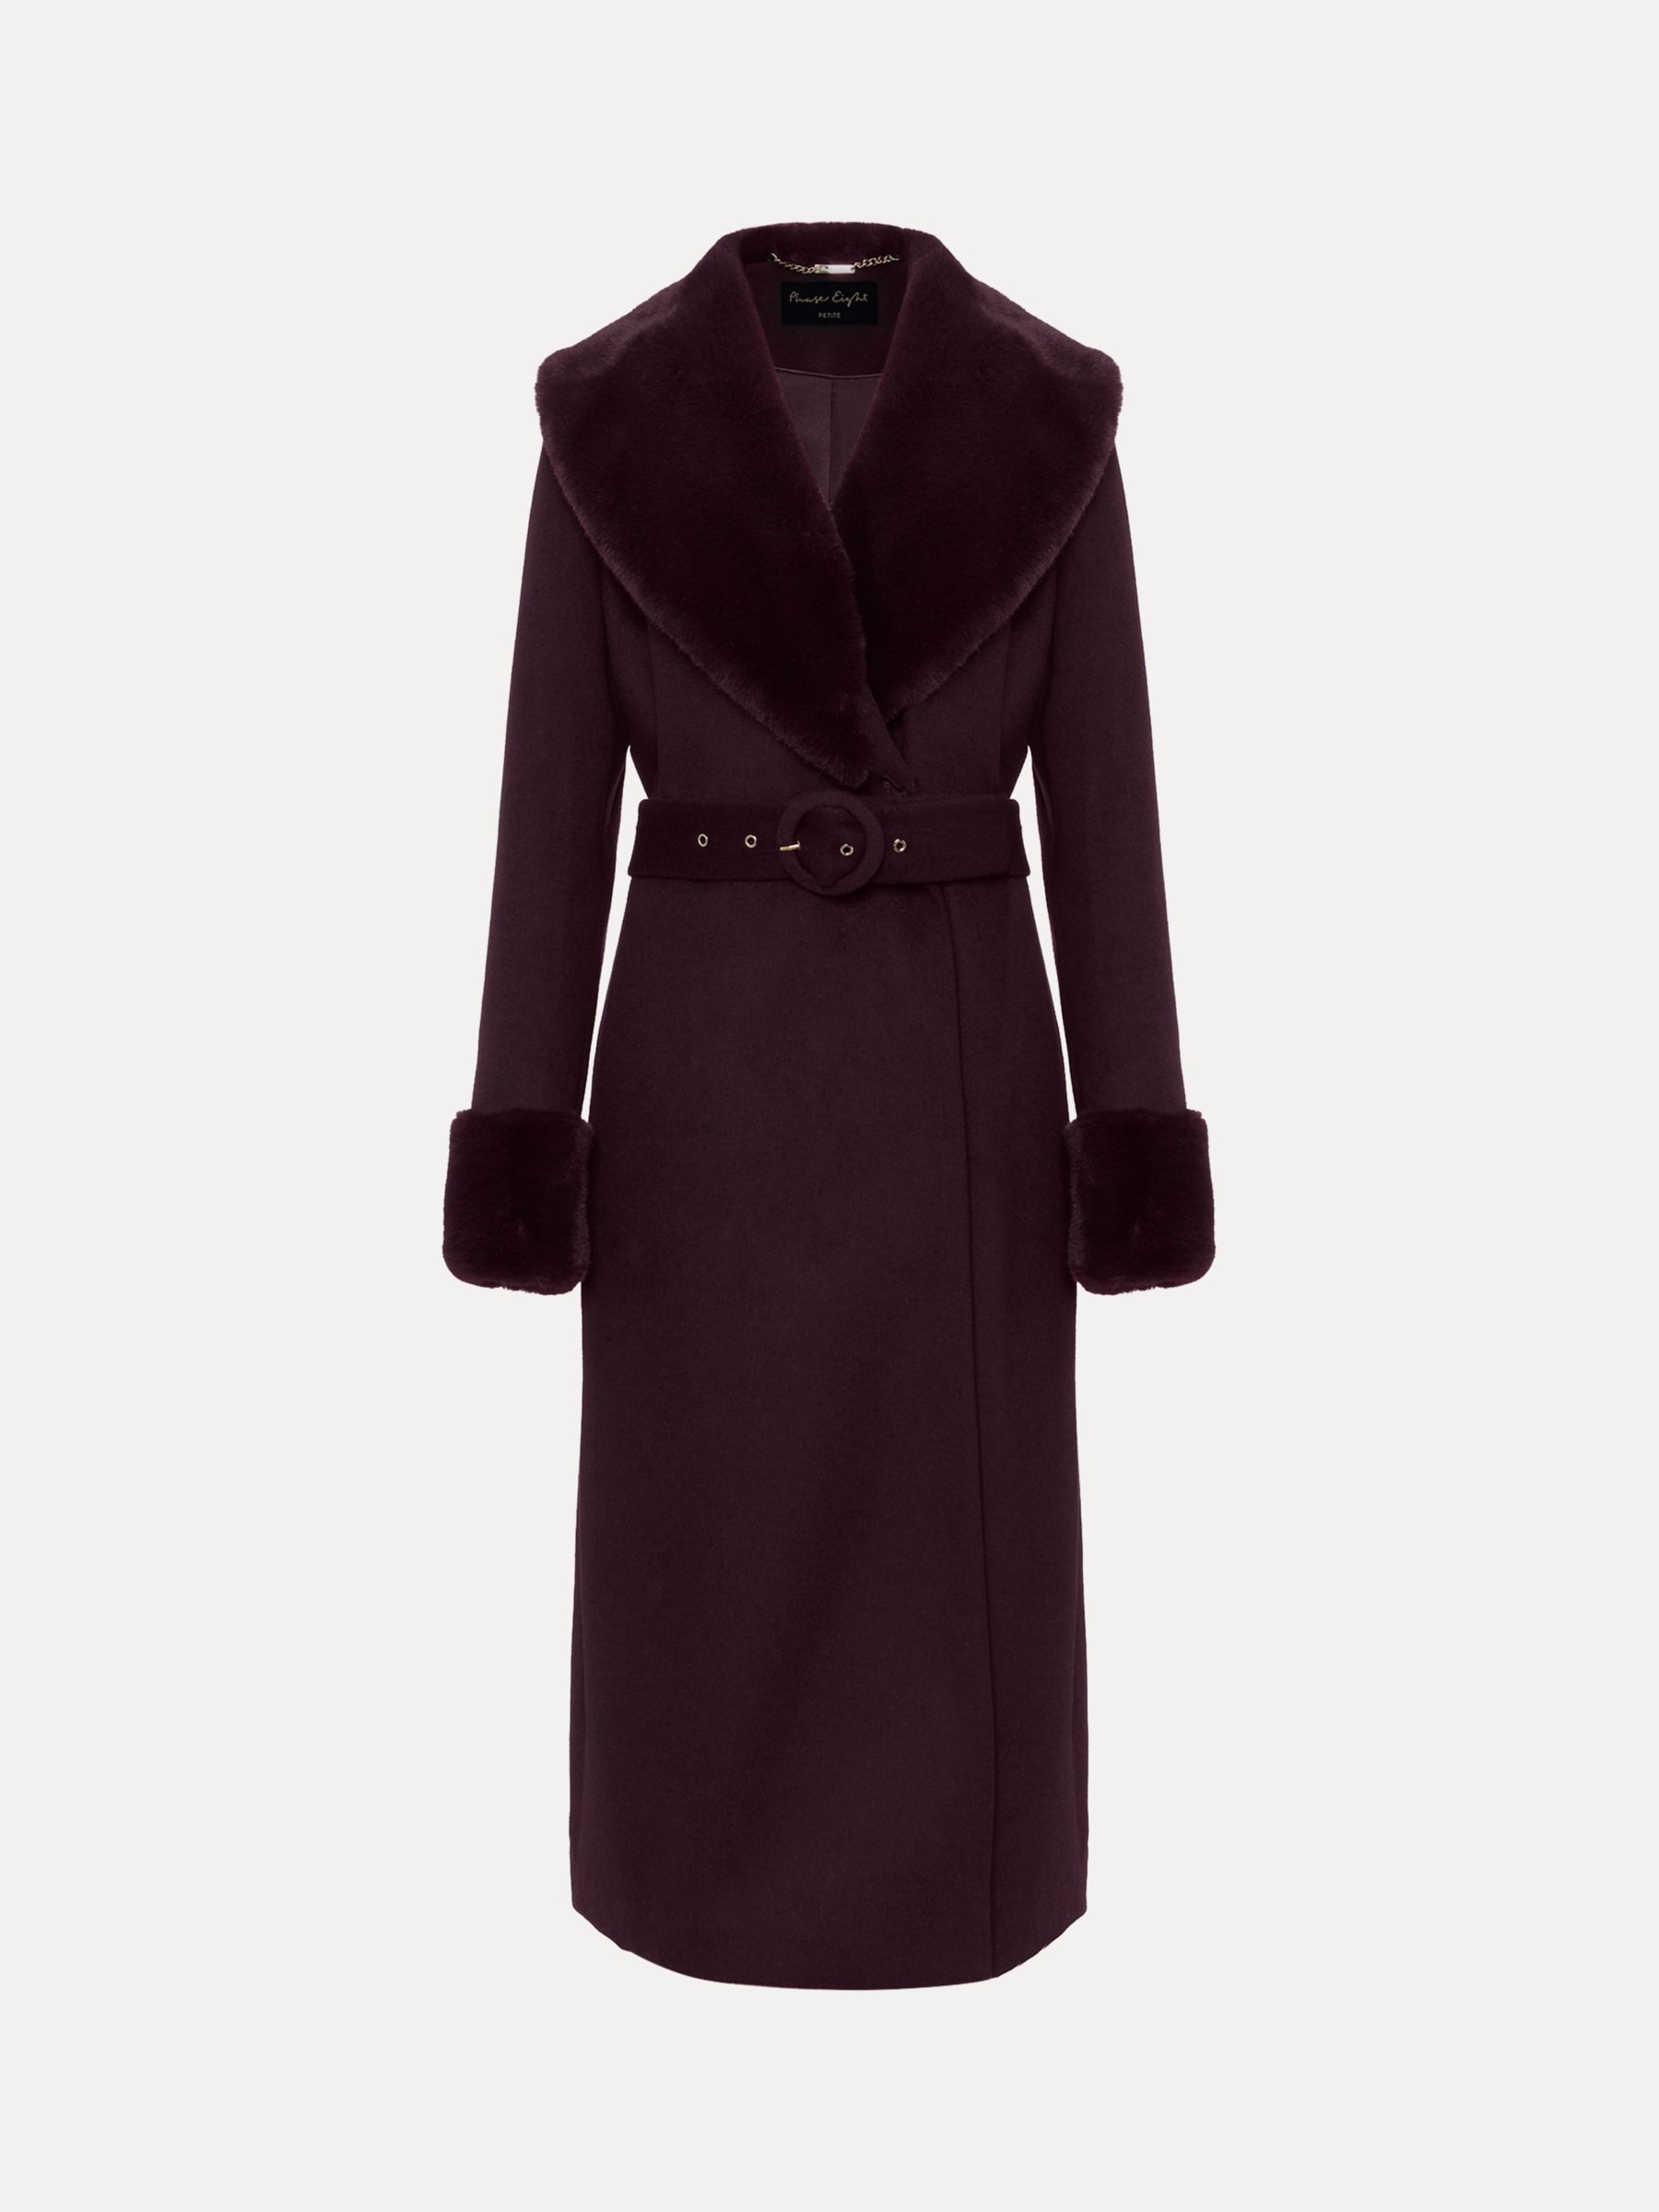 Phase Eight Petite Zylah Wool Blend Faux Fur Collar Smart Coat, Burgundy, 10